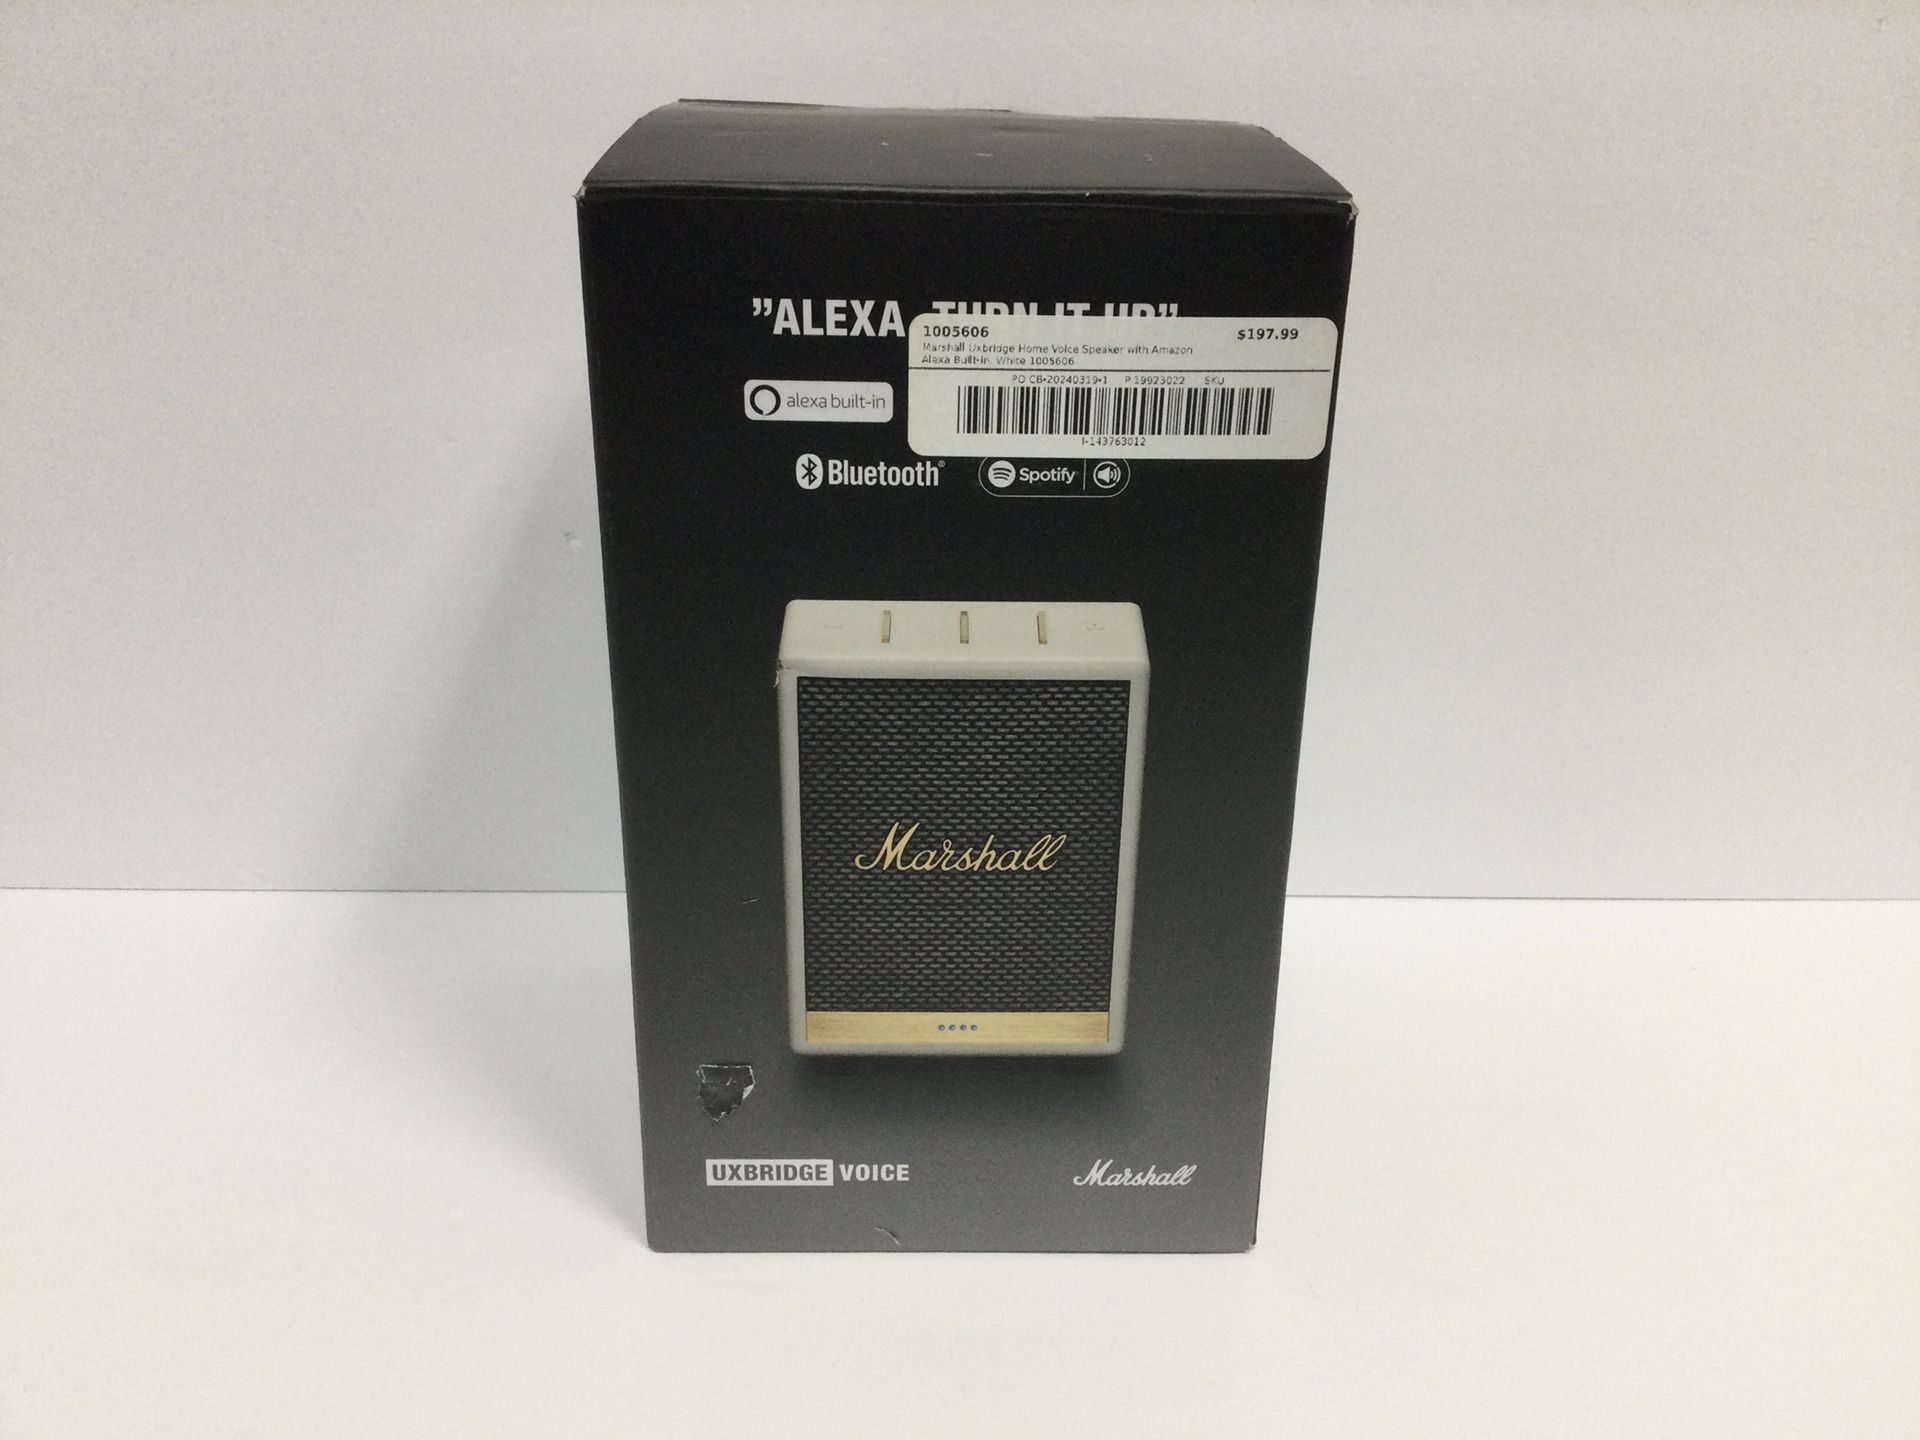 Marshall Uxbridge Home Voice Speaker Amazon Alexa Built-In - White - $197.99